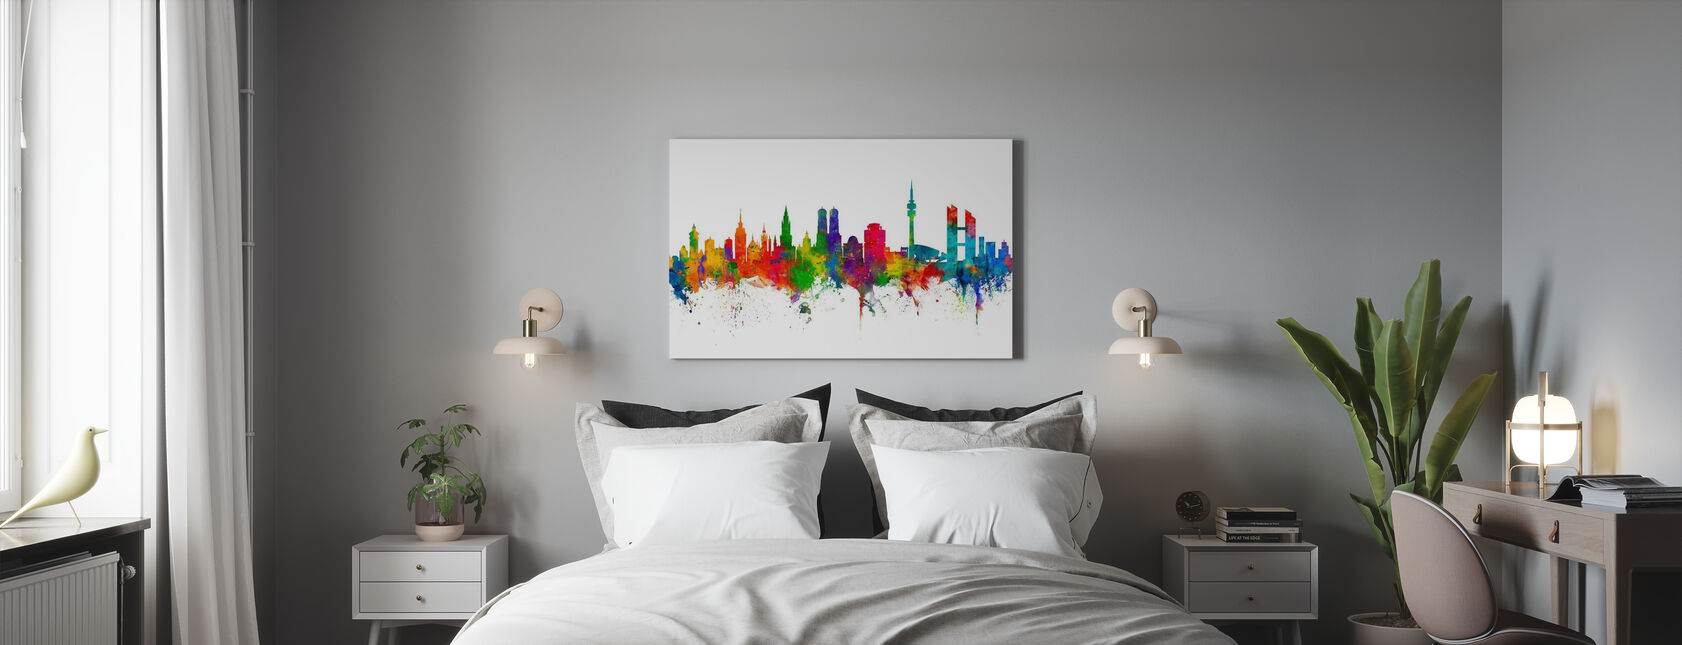 Munich Skyline - Canvas print - Bedroom